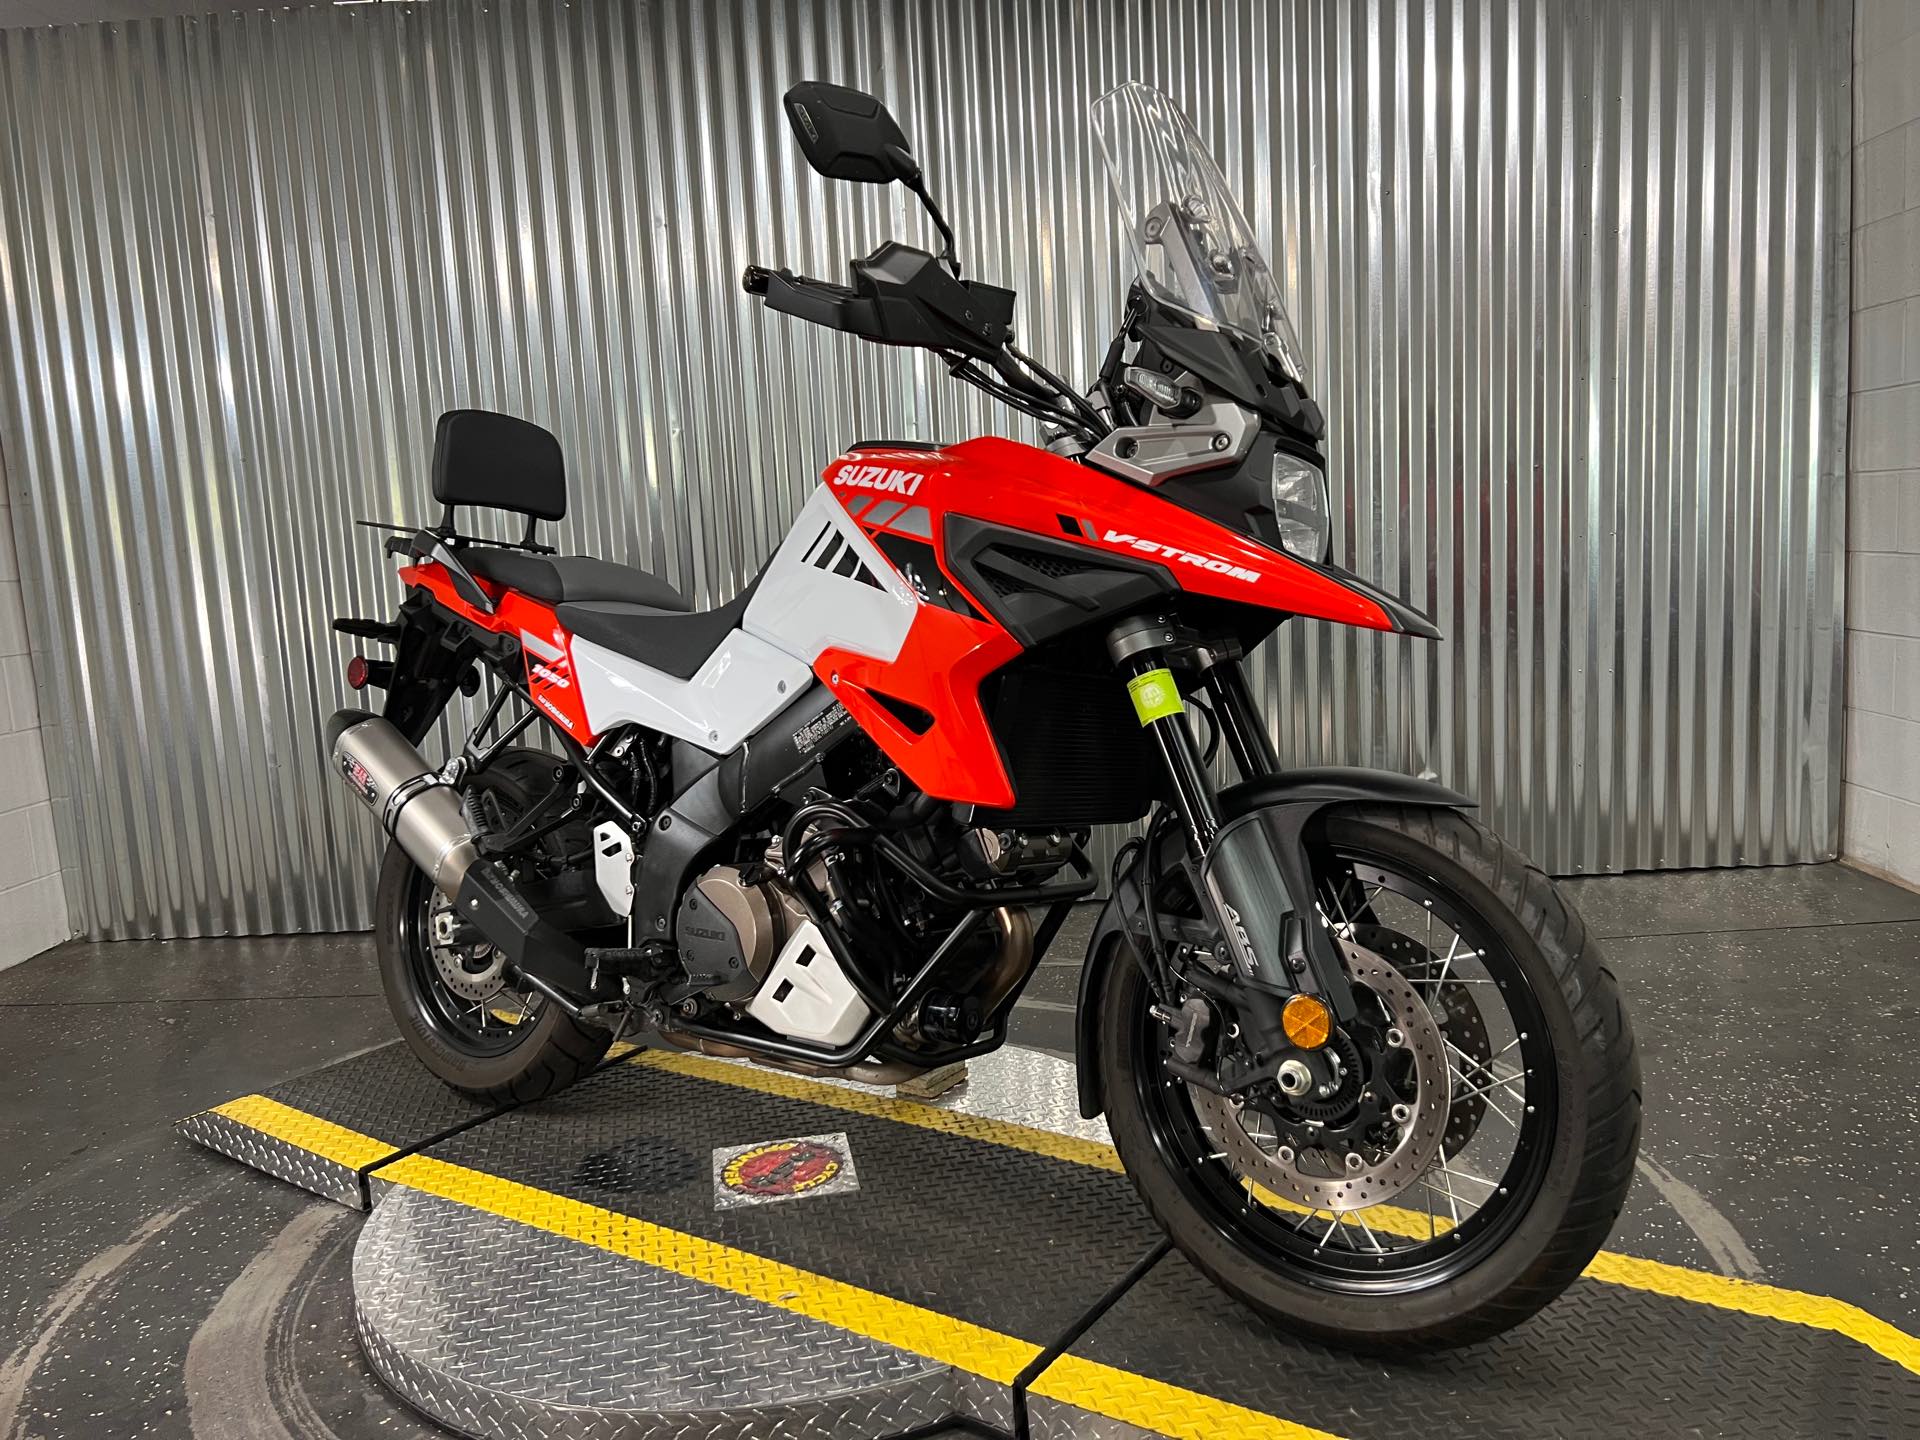 2020 Suzuki V-Strom 1050XT at Teddy Morse's BMW Motorcycles of Grand Junction